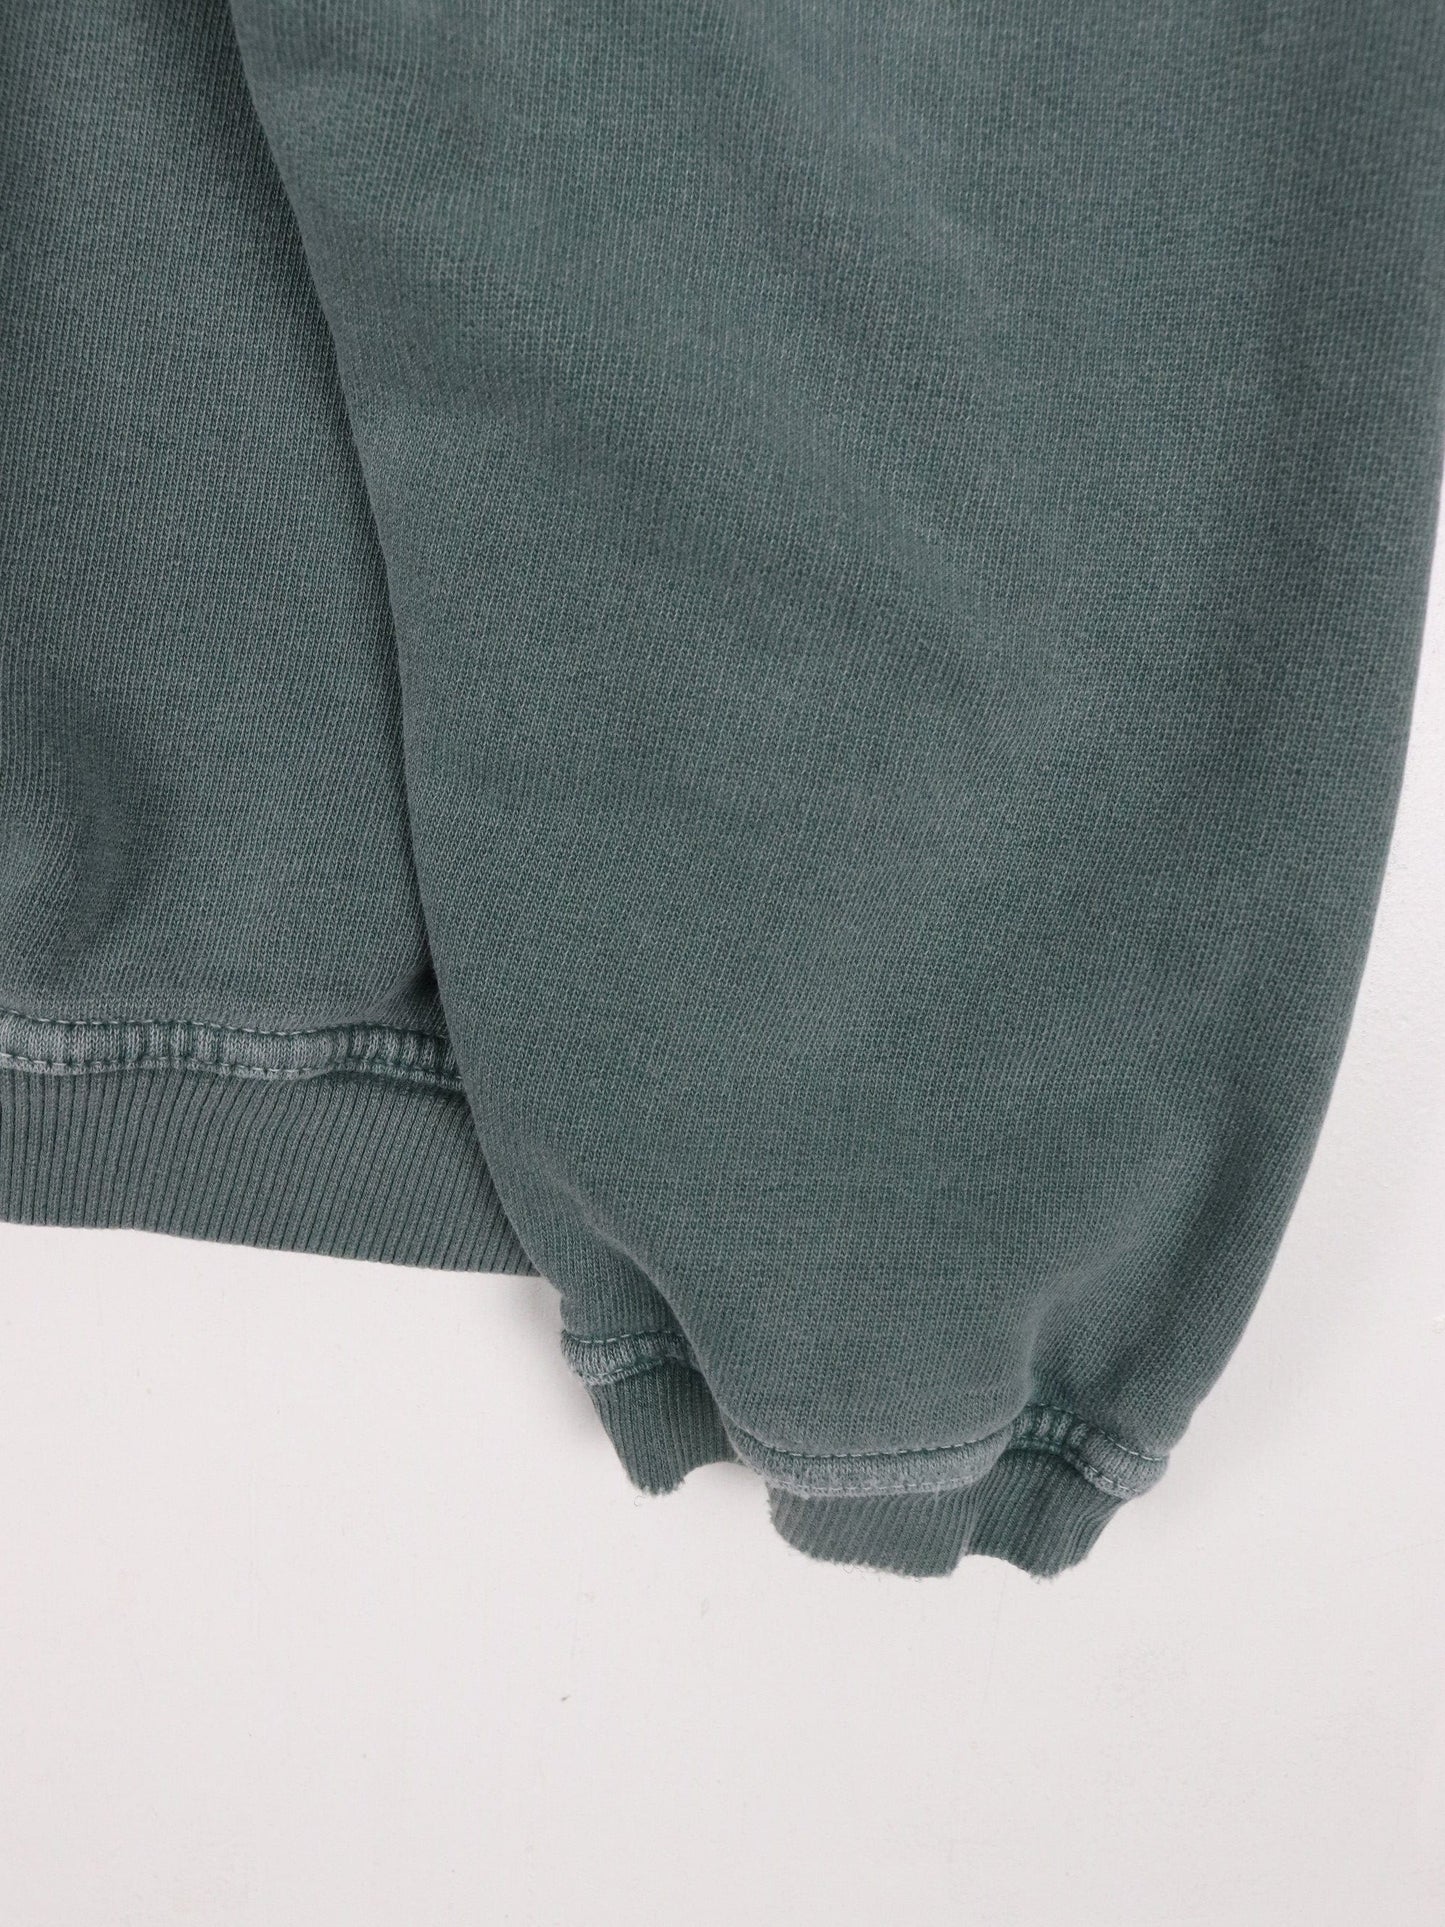 Other Sweatshirts & Hoodies Vintage Vermont Sweatshirt Mens Large Green Dyed